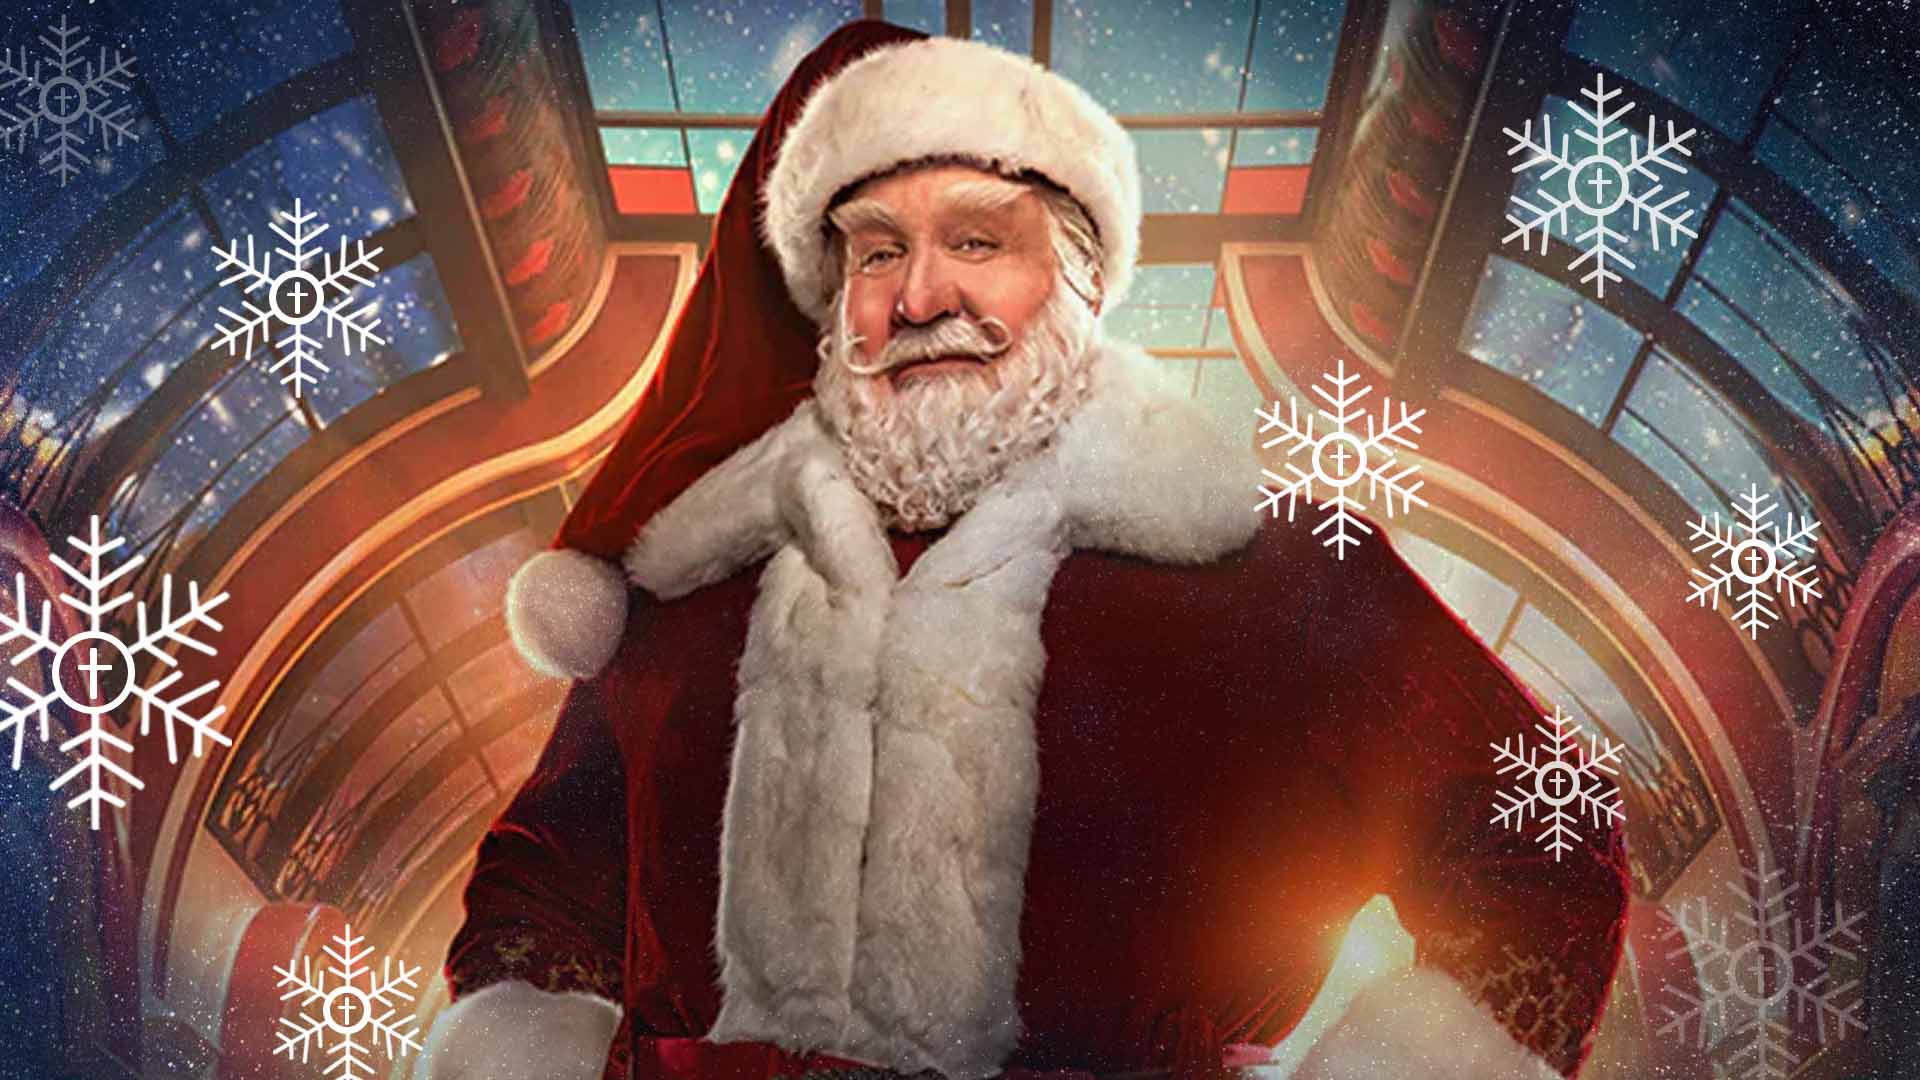 Tim Allen Keeps Christ in Christmas in New Disney+ Series "The Santa Clauses"